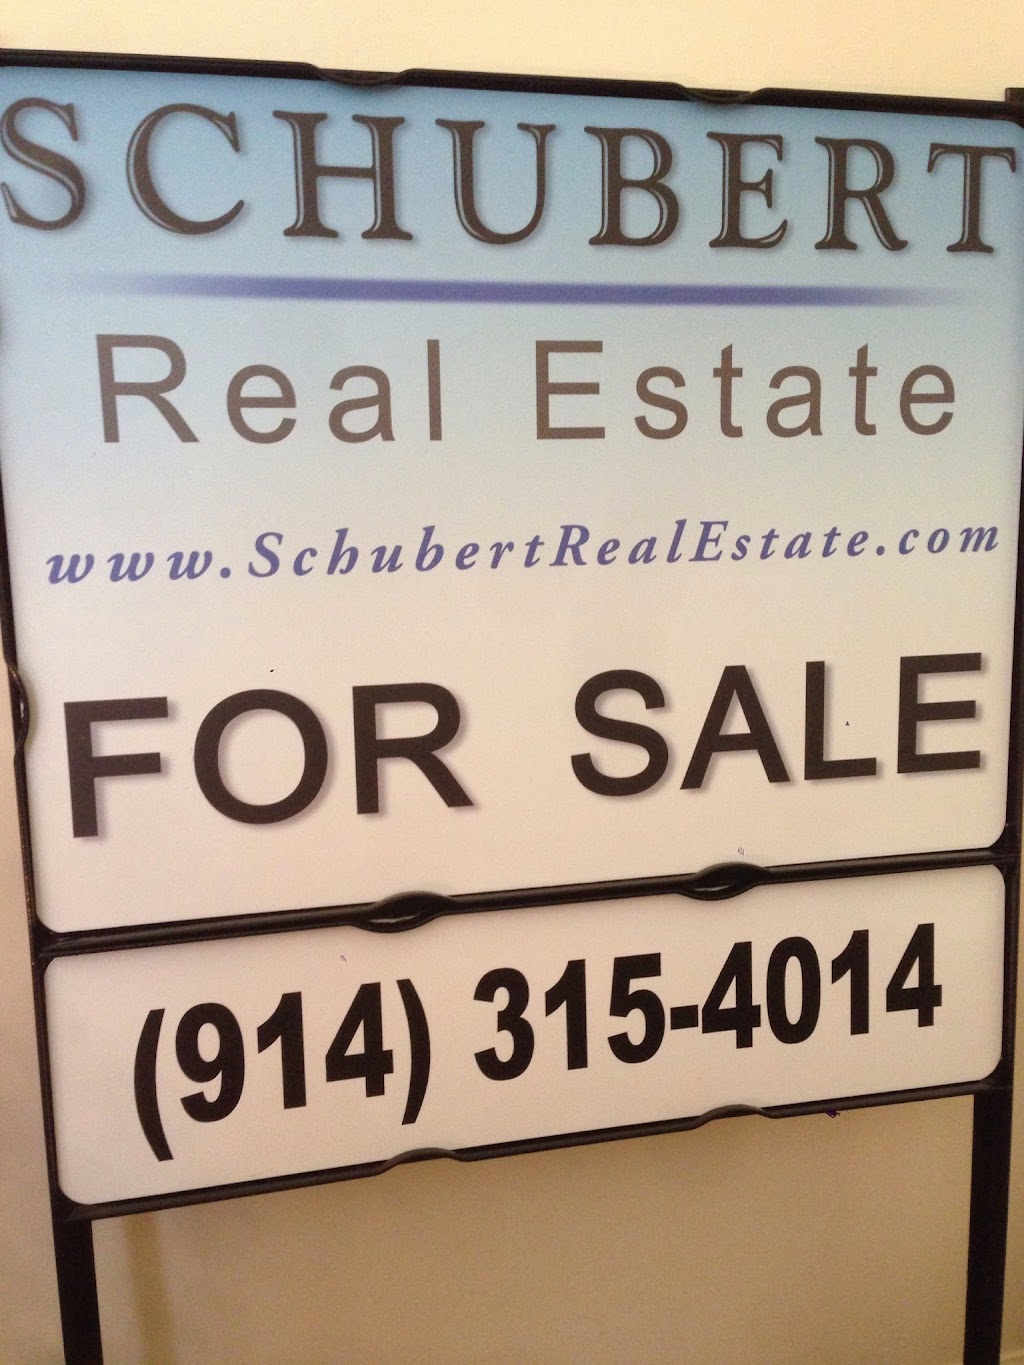 Schubert Real Estate Services | 41 Sunderland Ln, Katonah, NY 10536 | Phone: (914) 315-4014